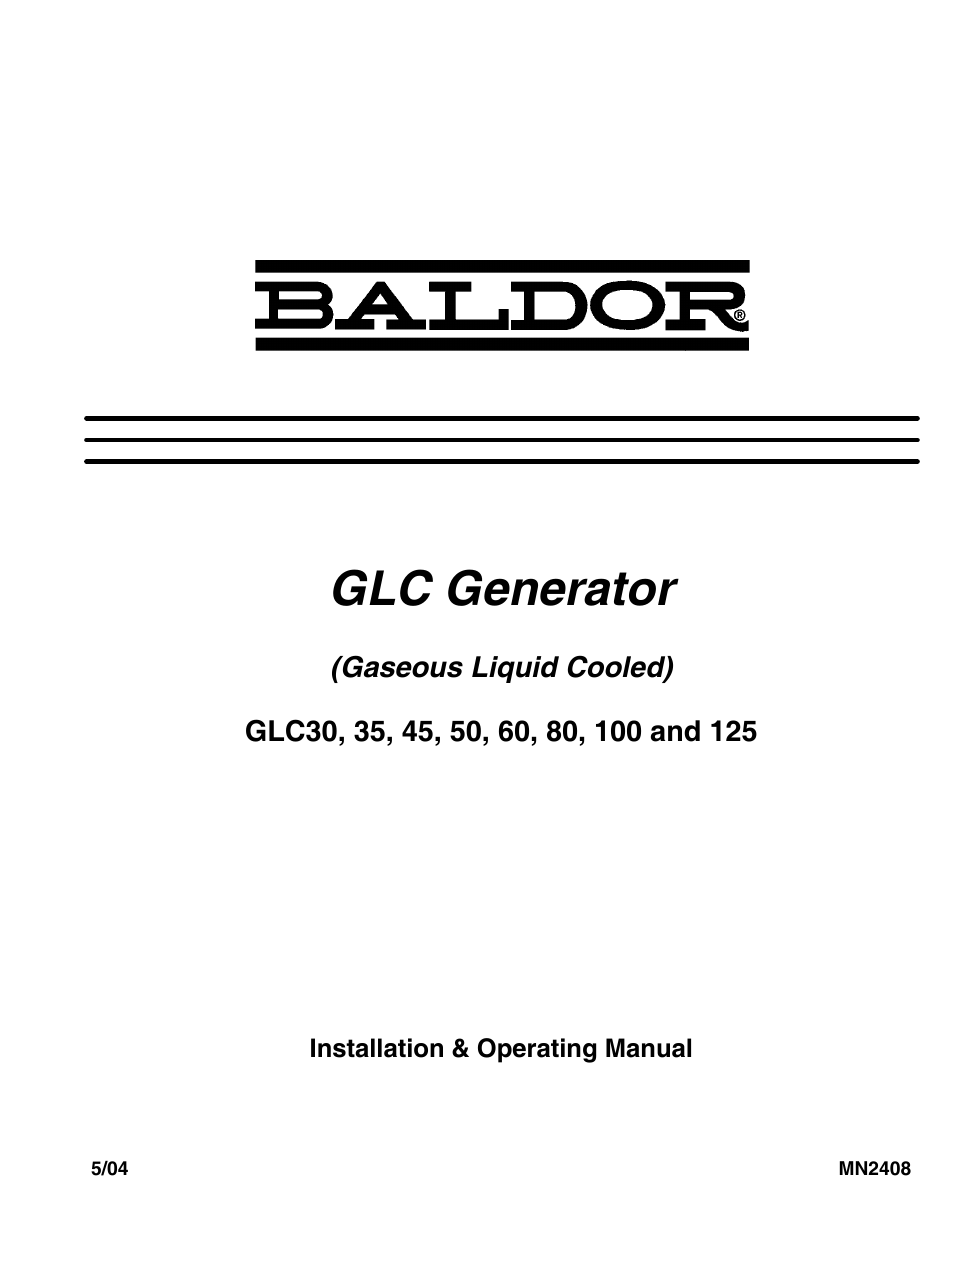 GLC GENERATOR GLC35